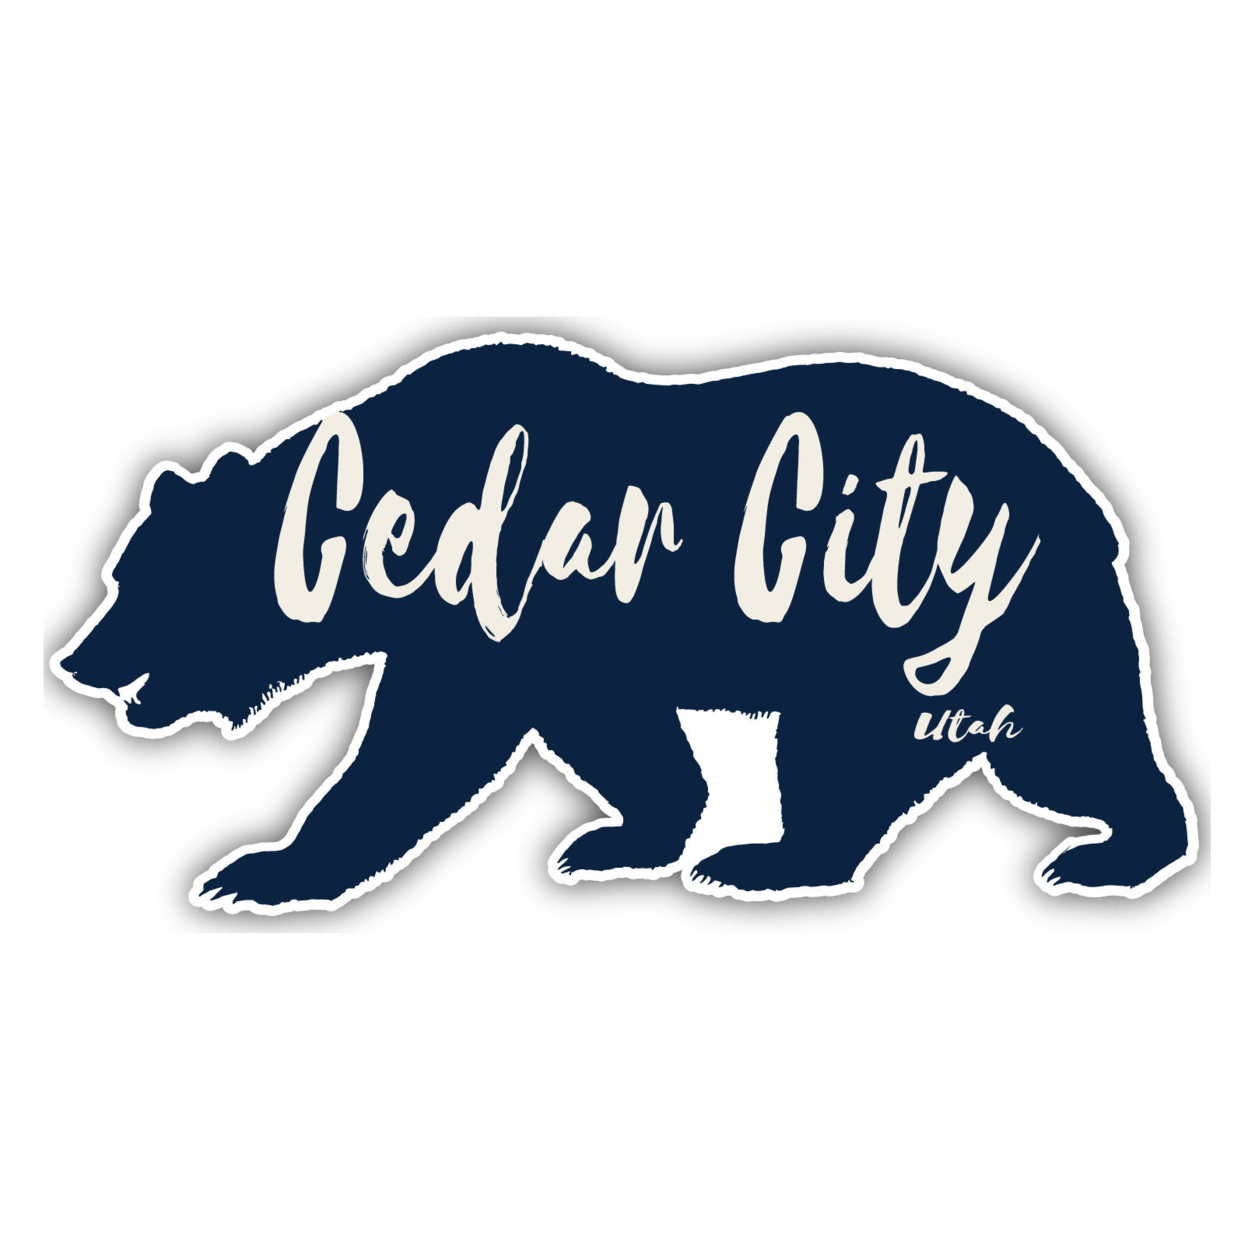 Cedar City Utah Souvenir Decorative Stickers (Choose Theme And Size) - 4-Pack, 8-Inch, Bear